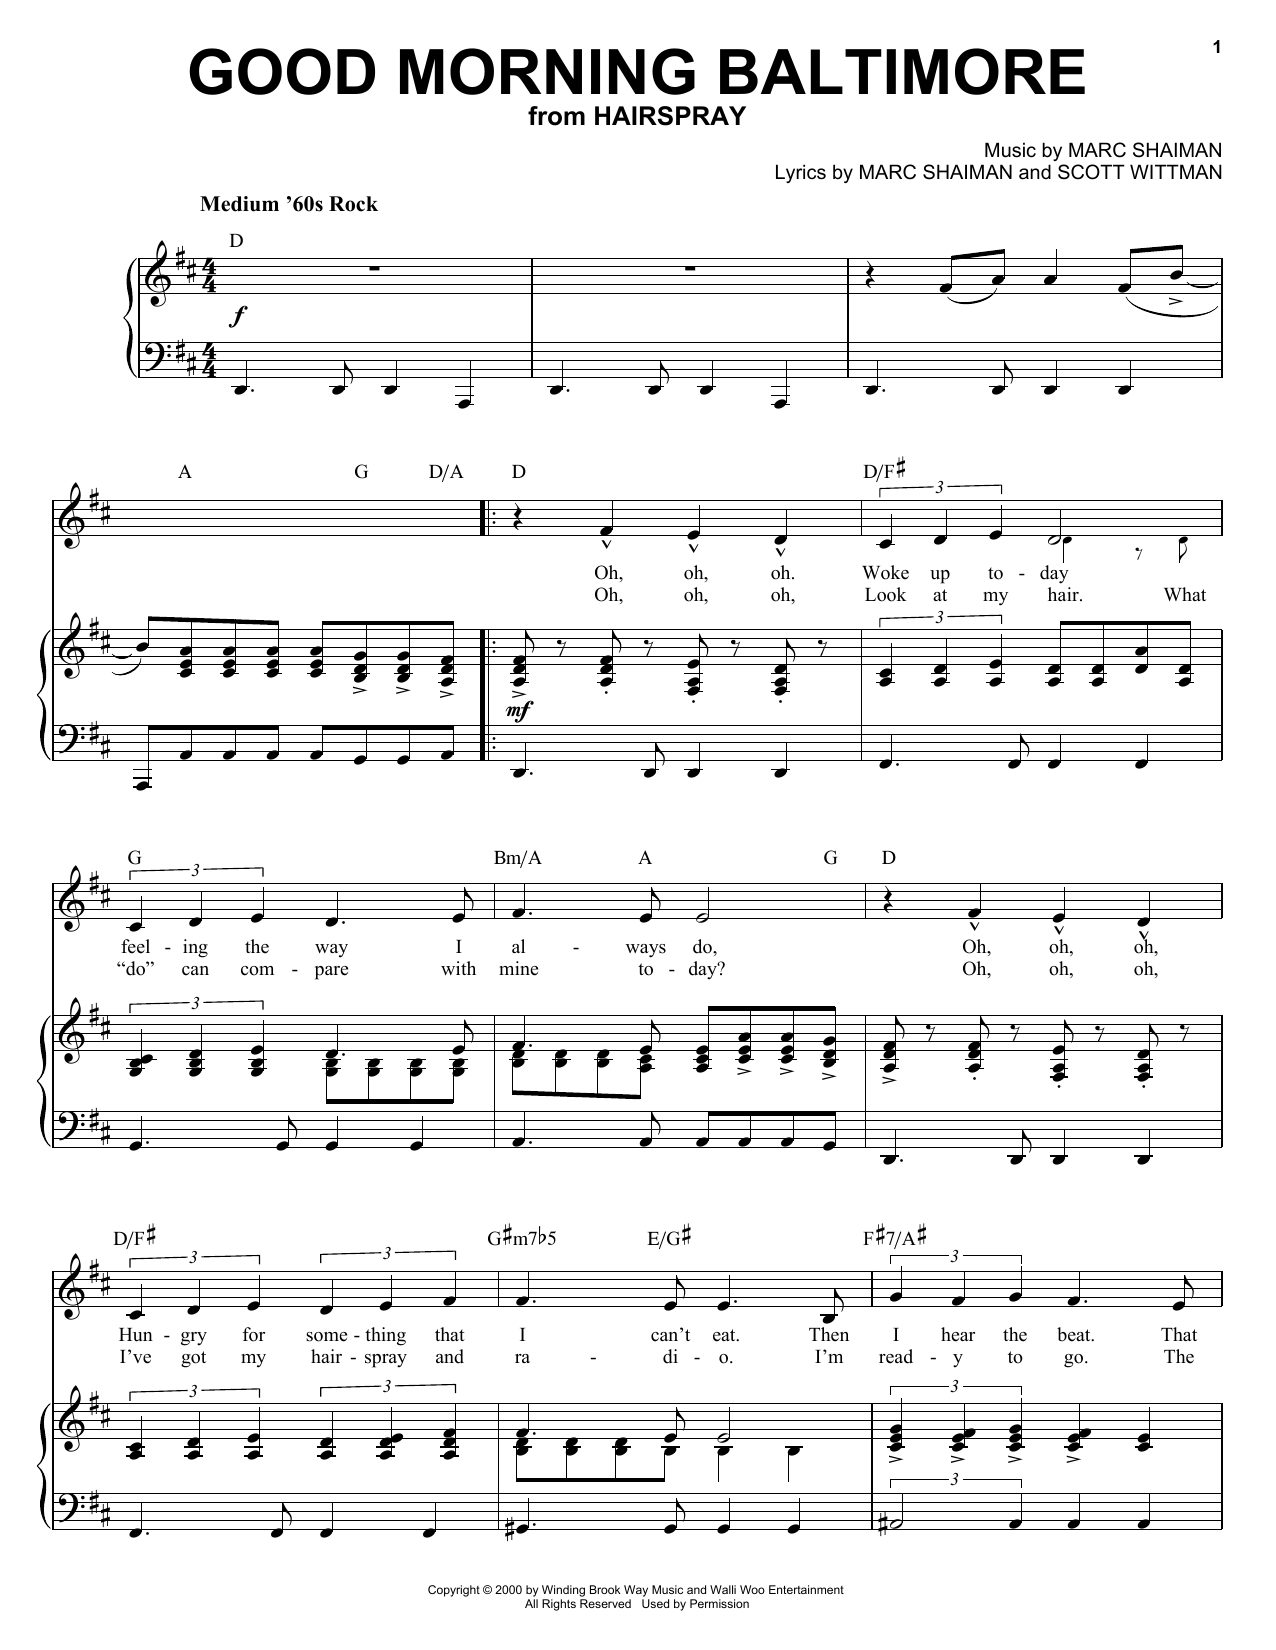 Marc Shaiman Good Morning Baltimore Sheet Music Notes & Chords for Melody Line, Lyrics & Chords - Download or Print PDF